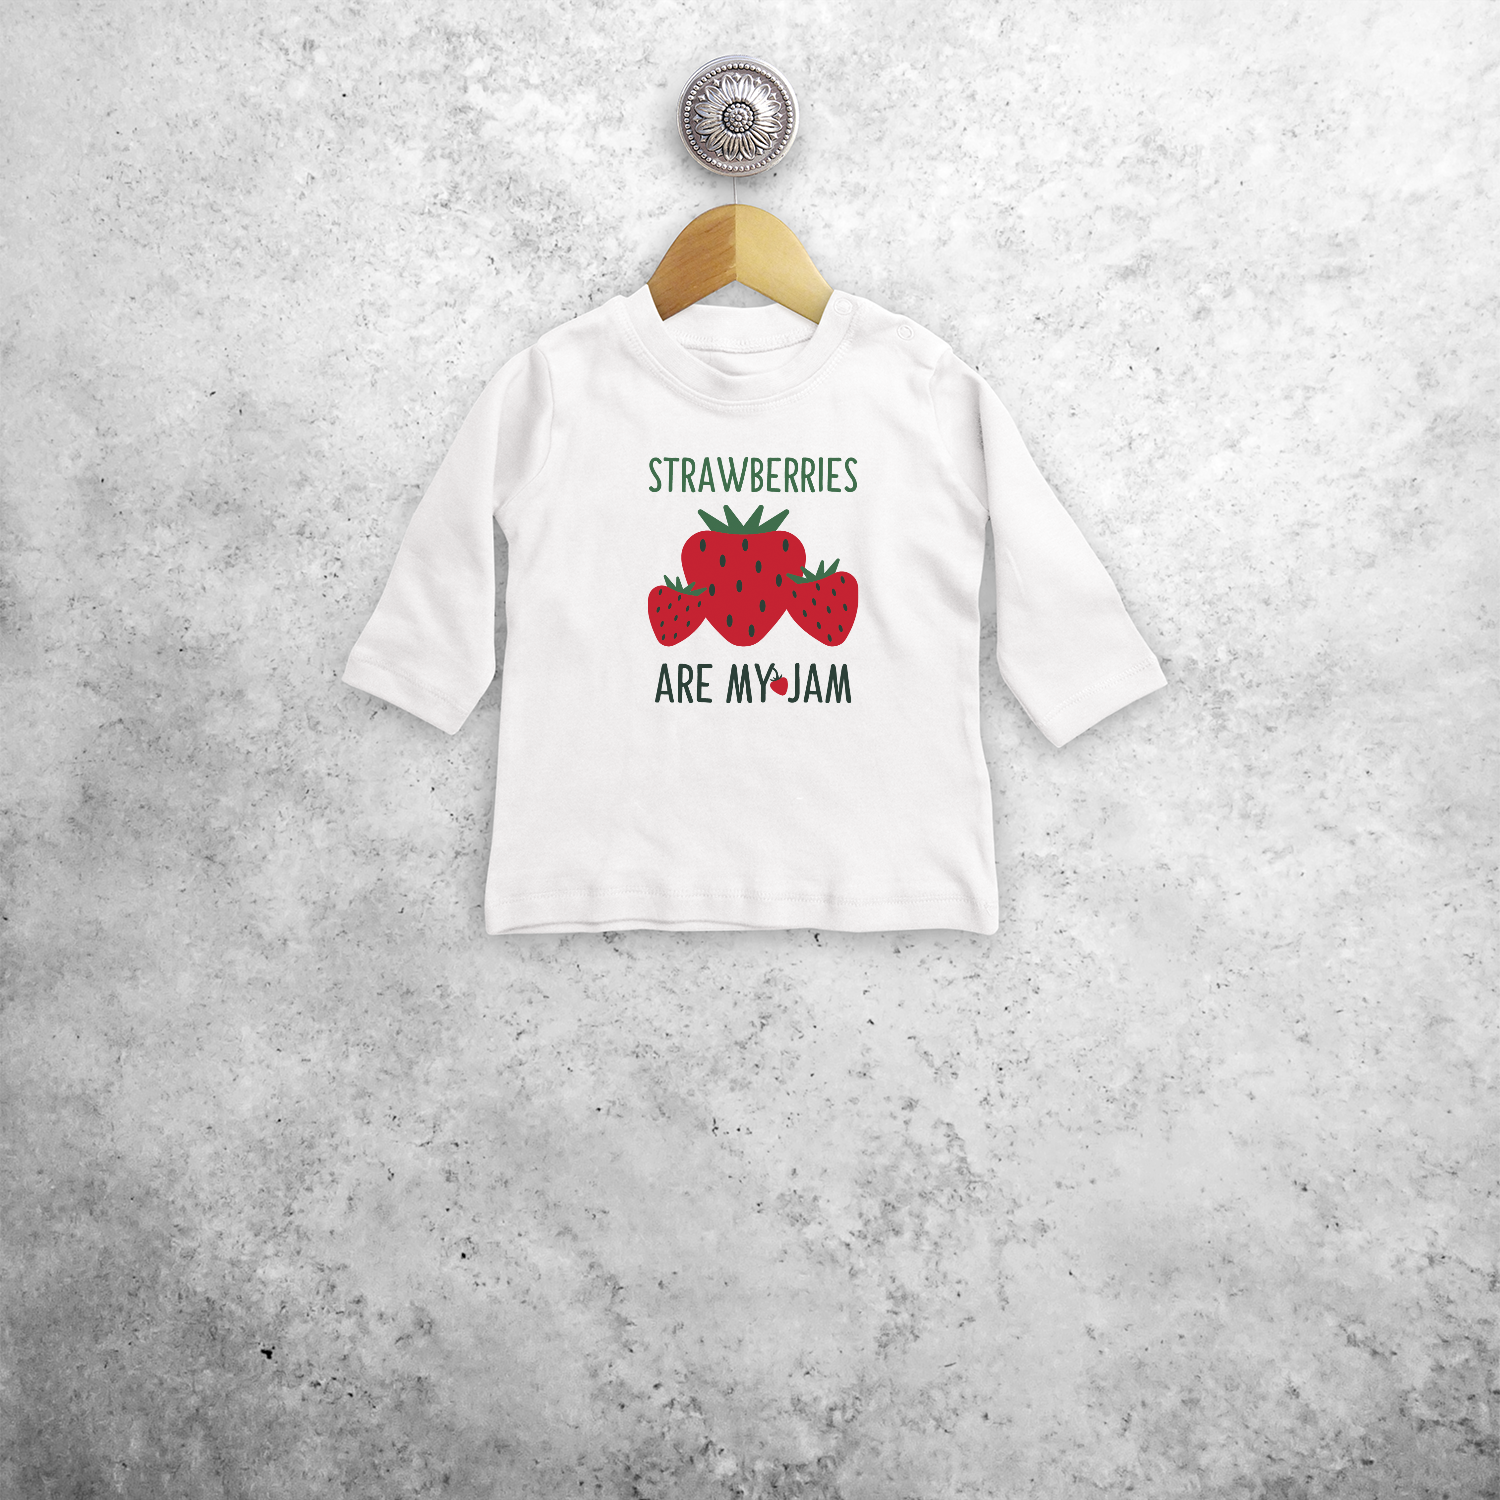 'Strawberries are my jam' baby longsleeve shirt